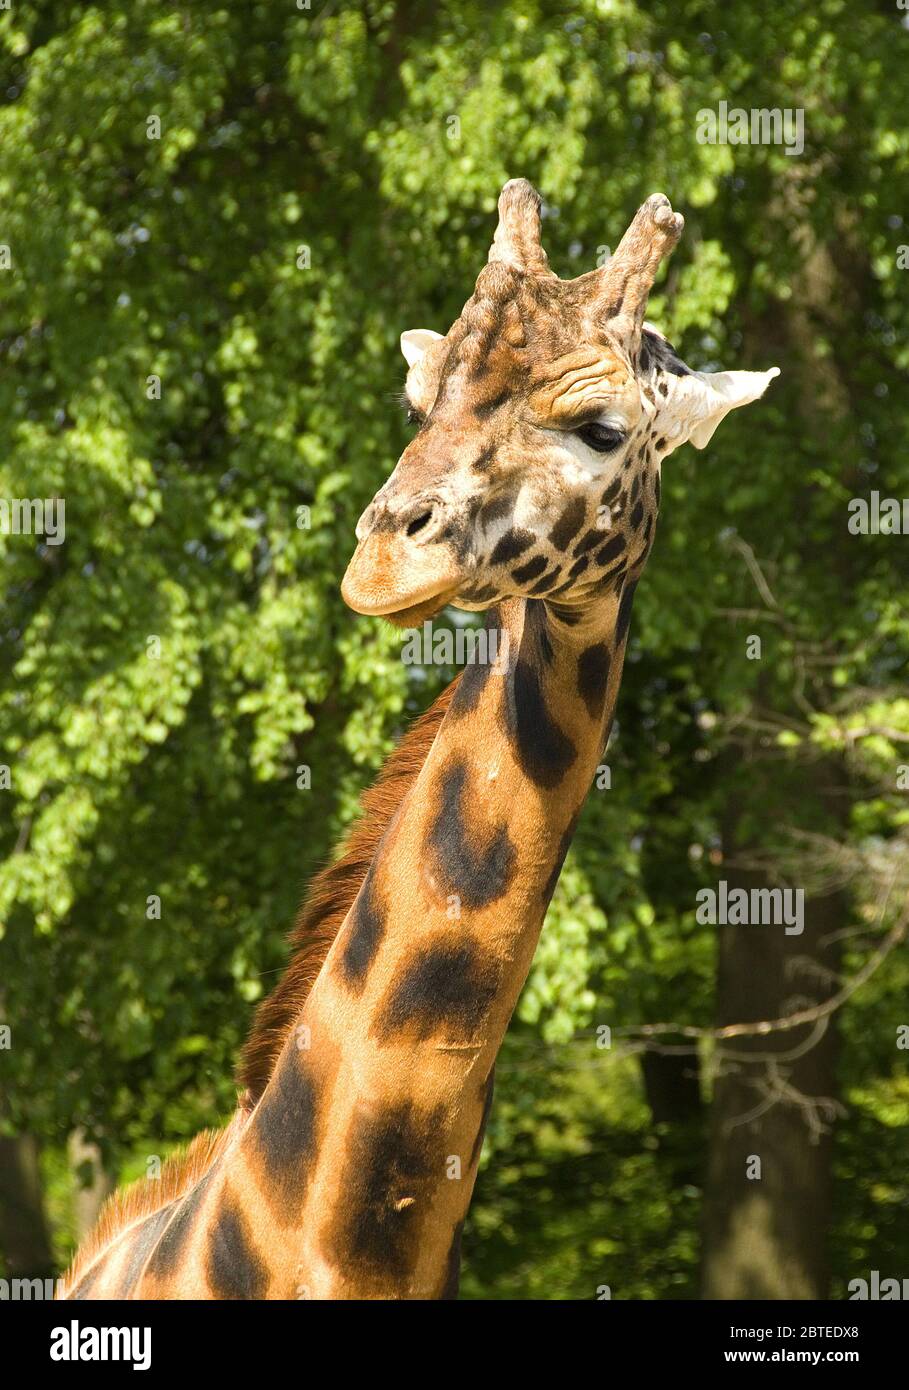 Giraffe - Giraffa camelopardalis, potrait of girafffe, safari in Kenya, Africa, Cute member of African big five mammals. Stock Photo